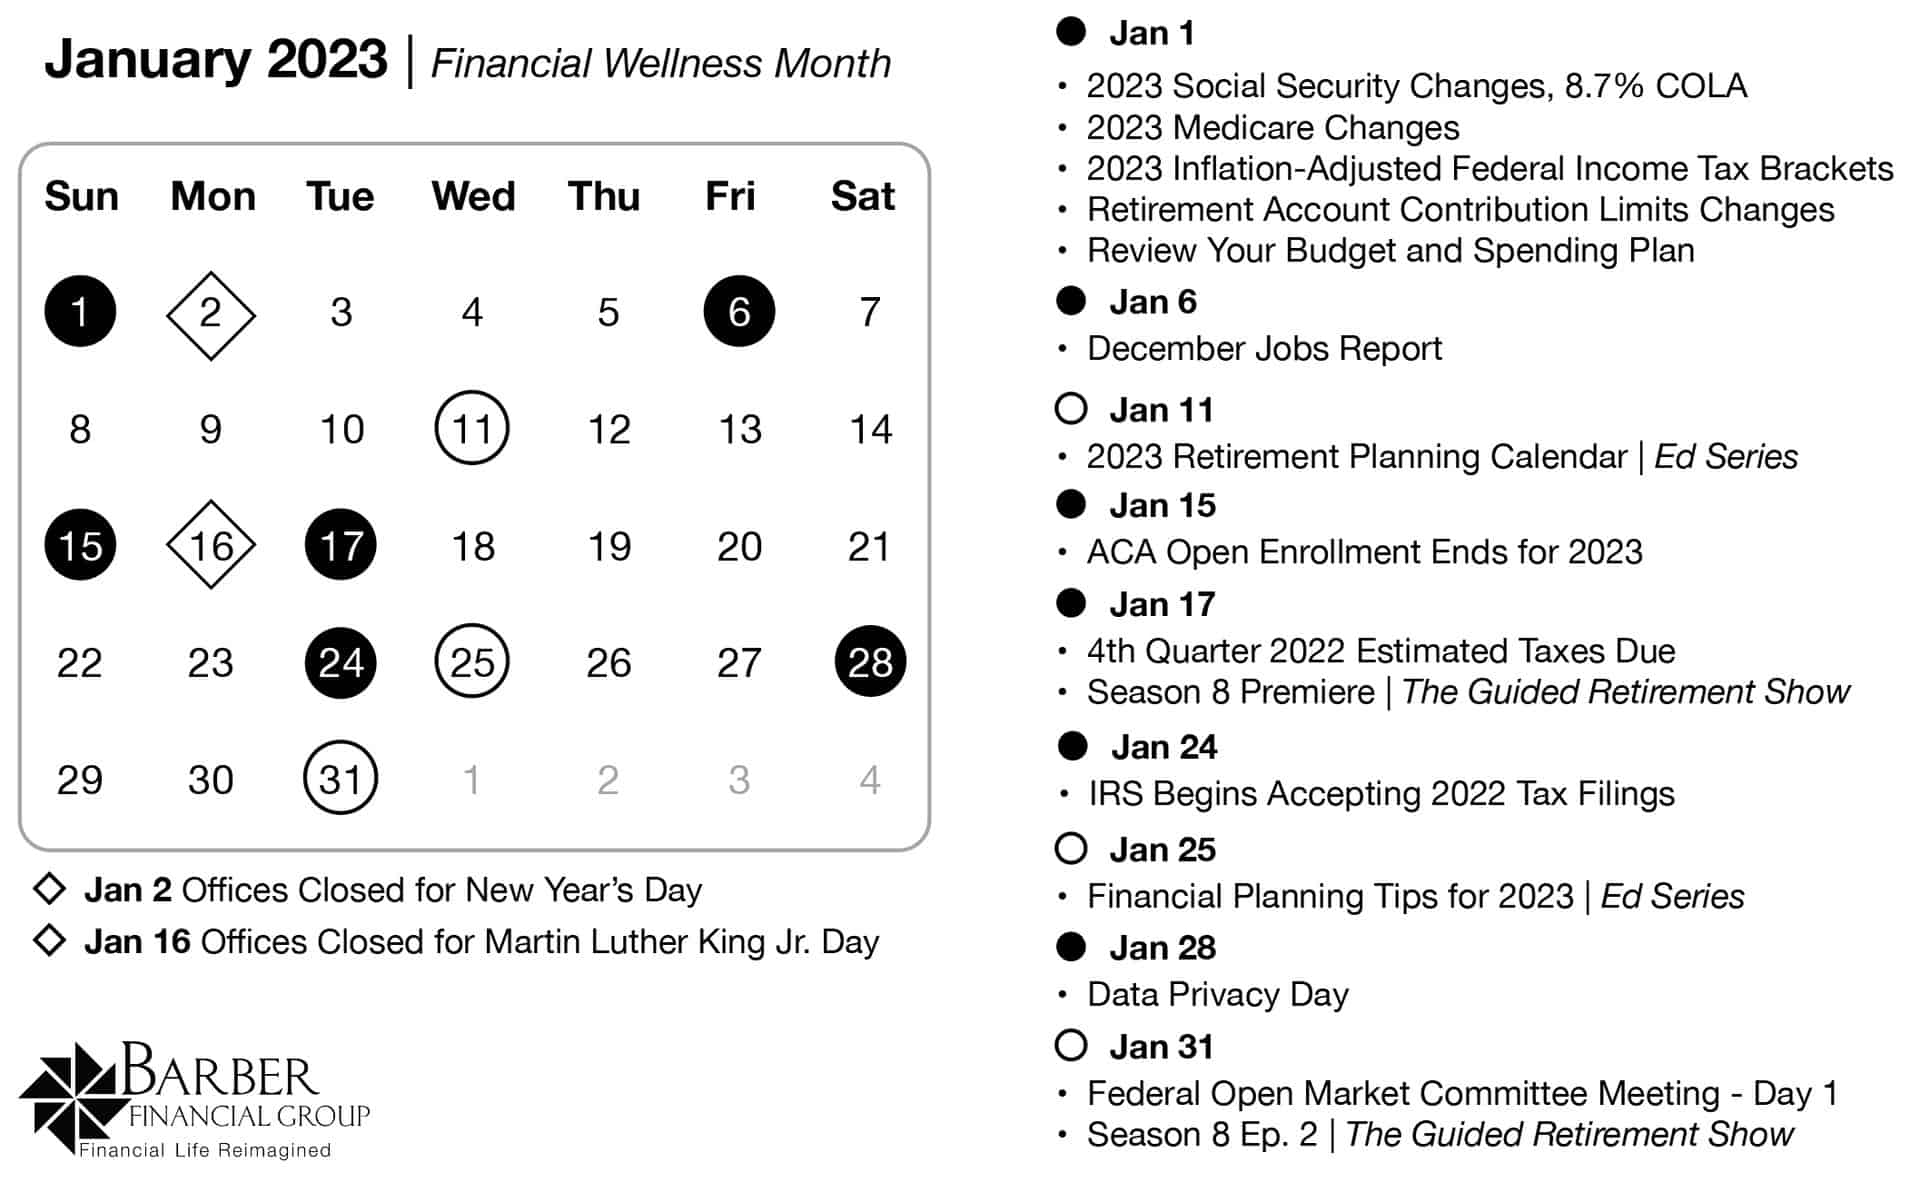 January 2023 - Retirement Planning Calendar